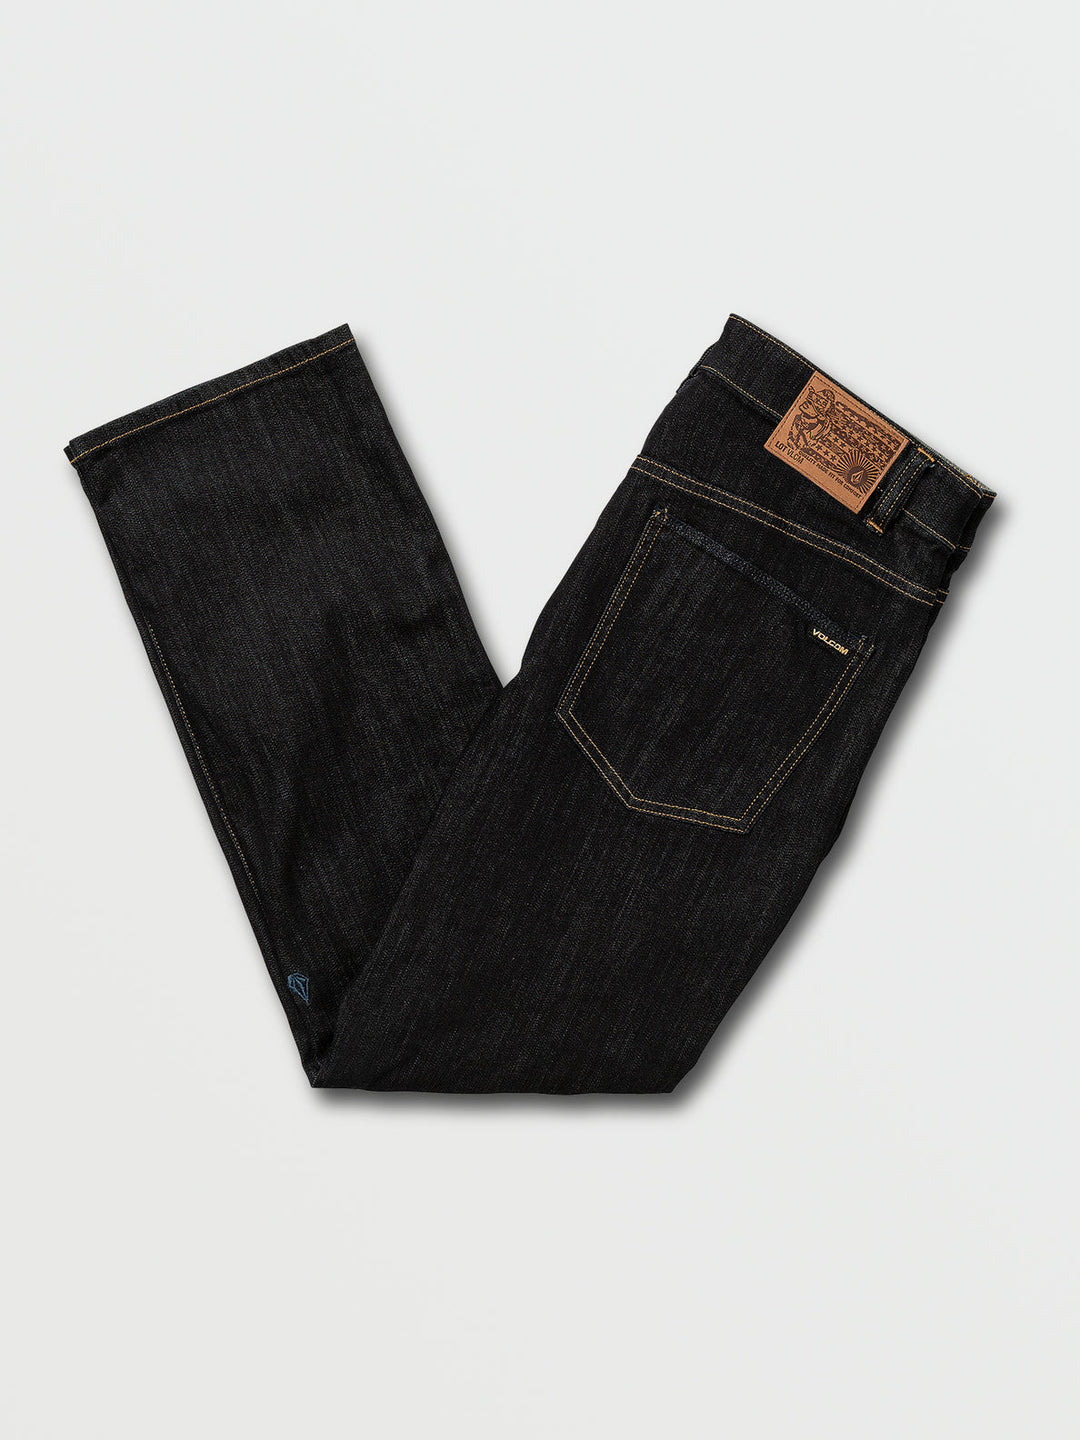 Volcom Solver Modern Fit Jeans - Rinse - Sun Diego Boardshop